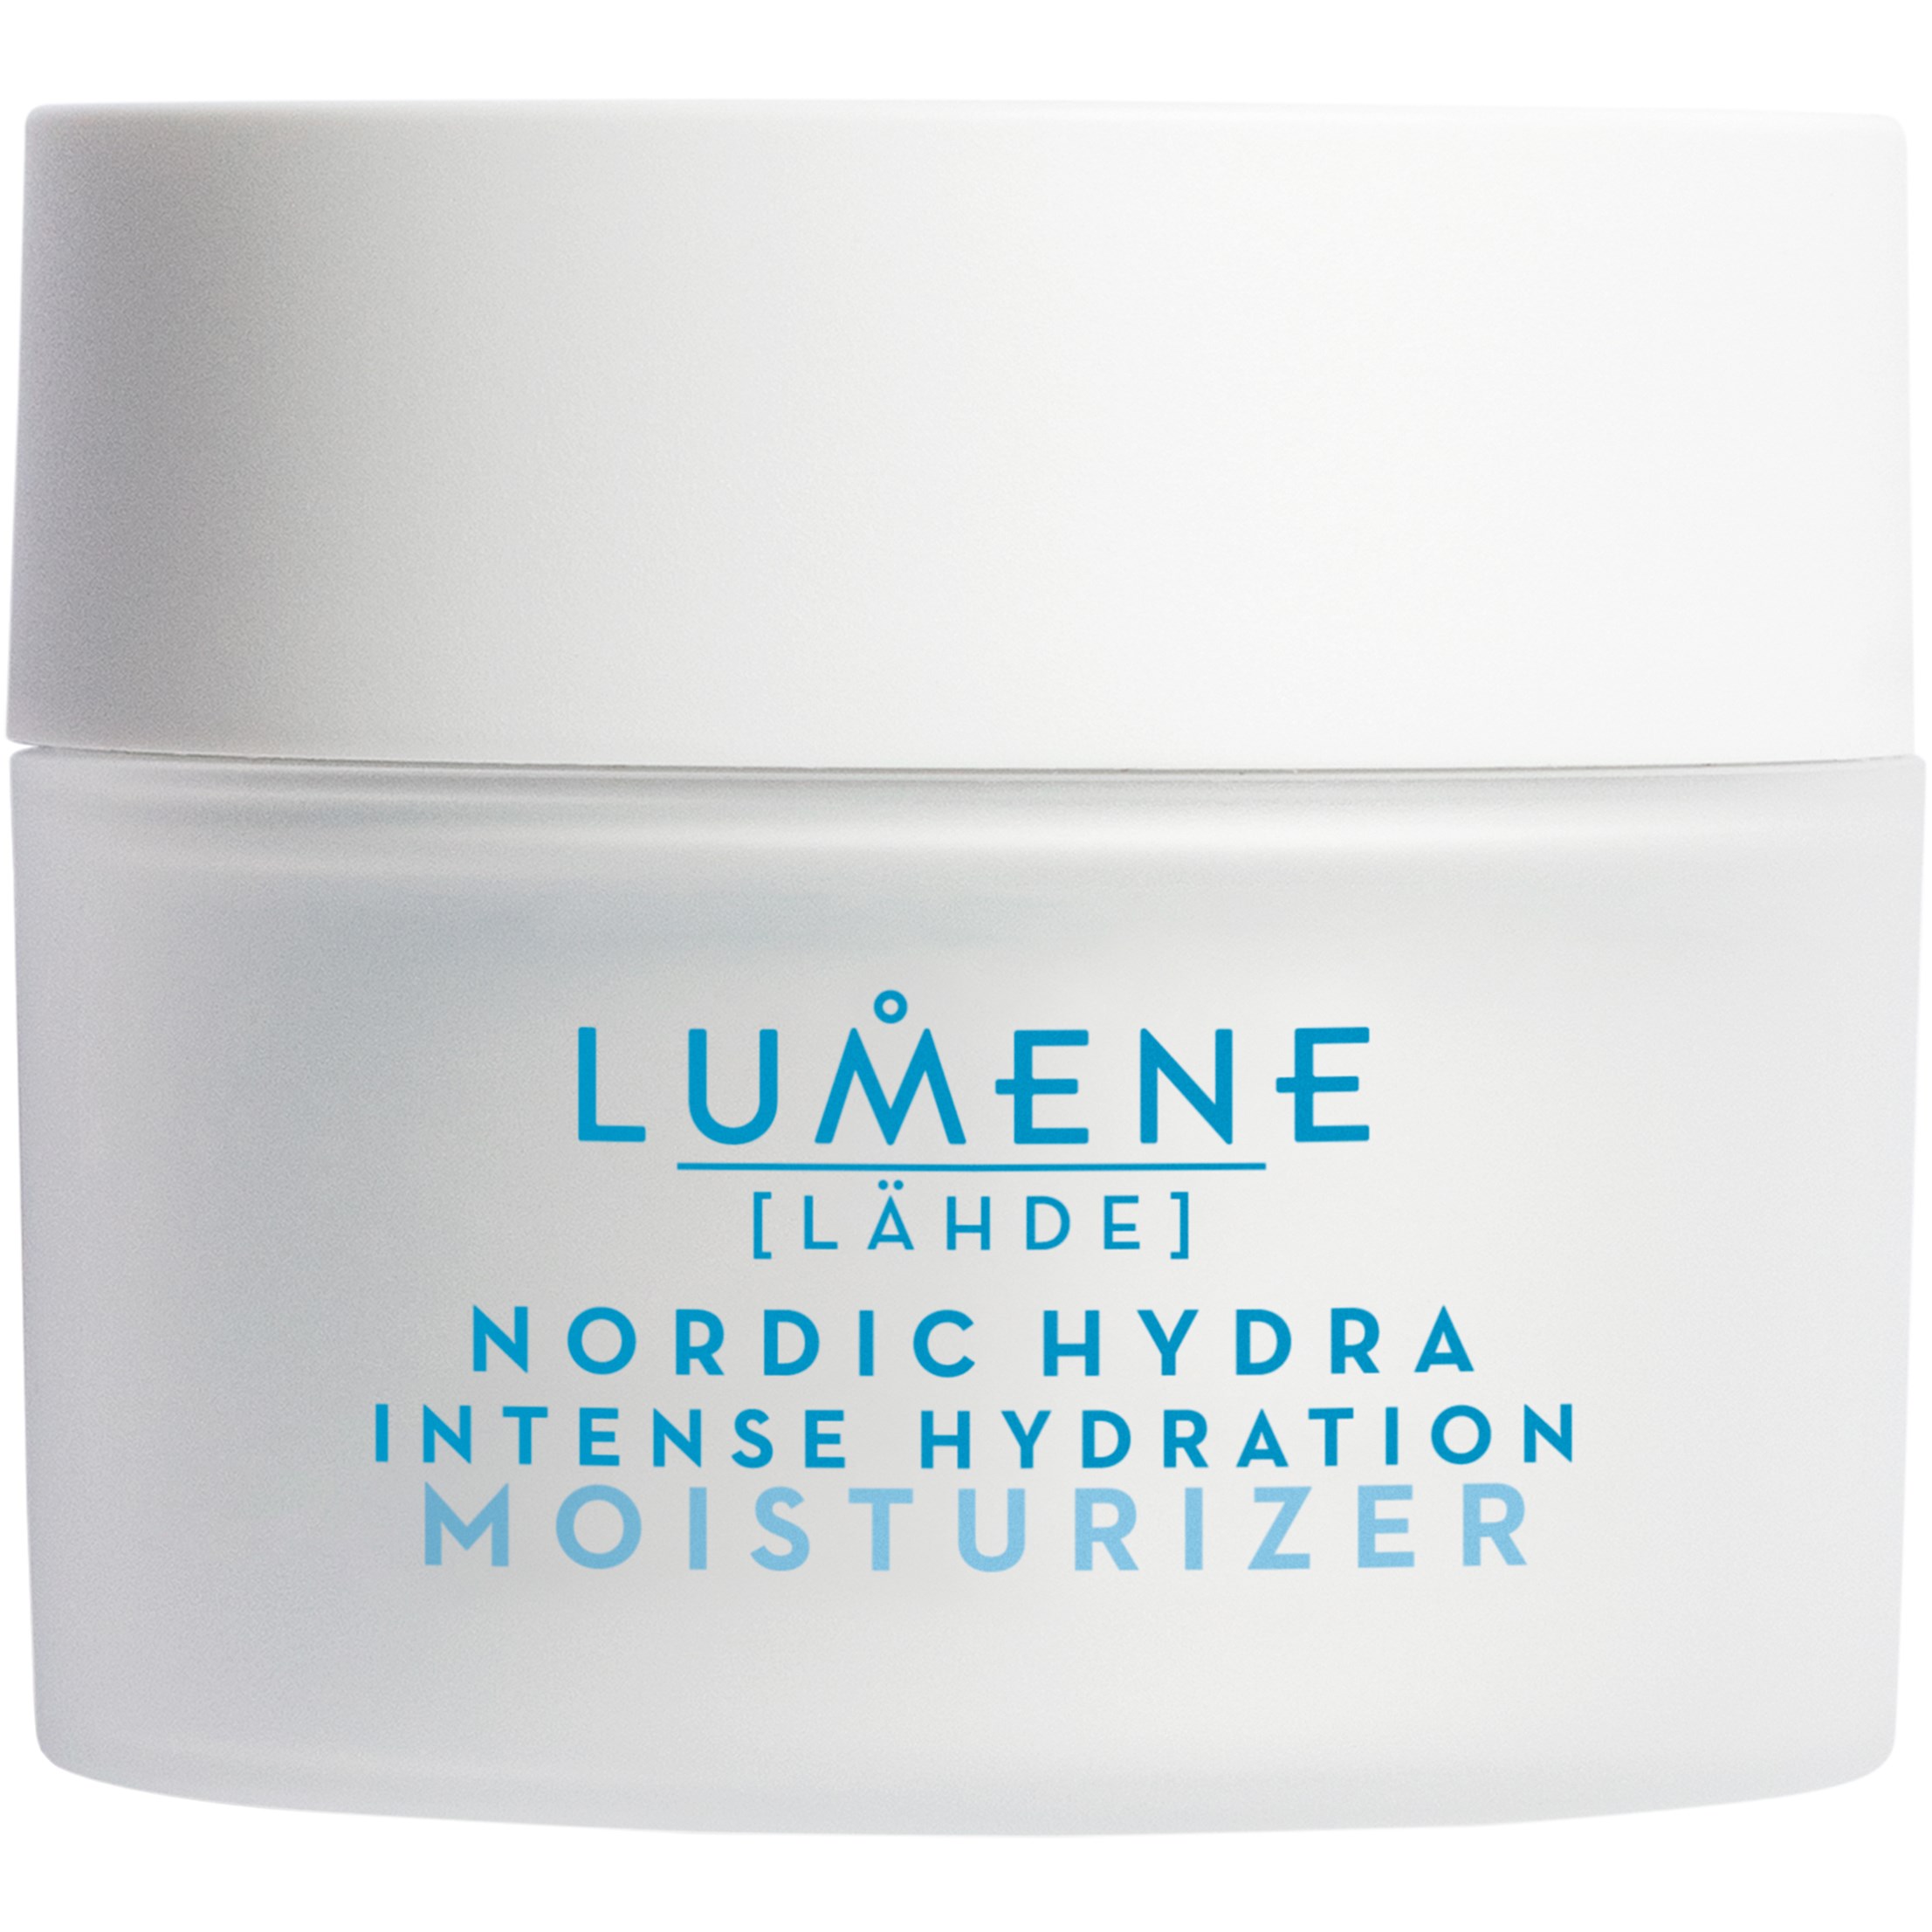 Lumene Nordic Hydra Intense Hydration Moisturizer 50 ml